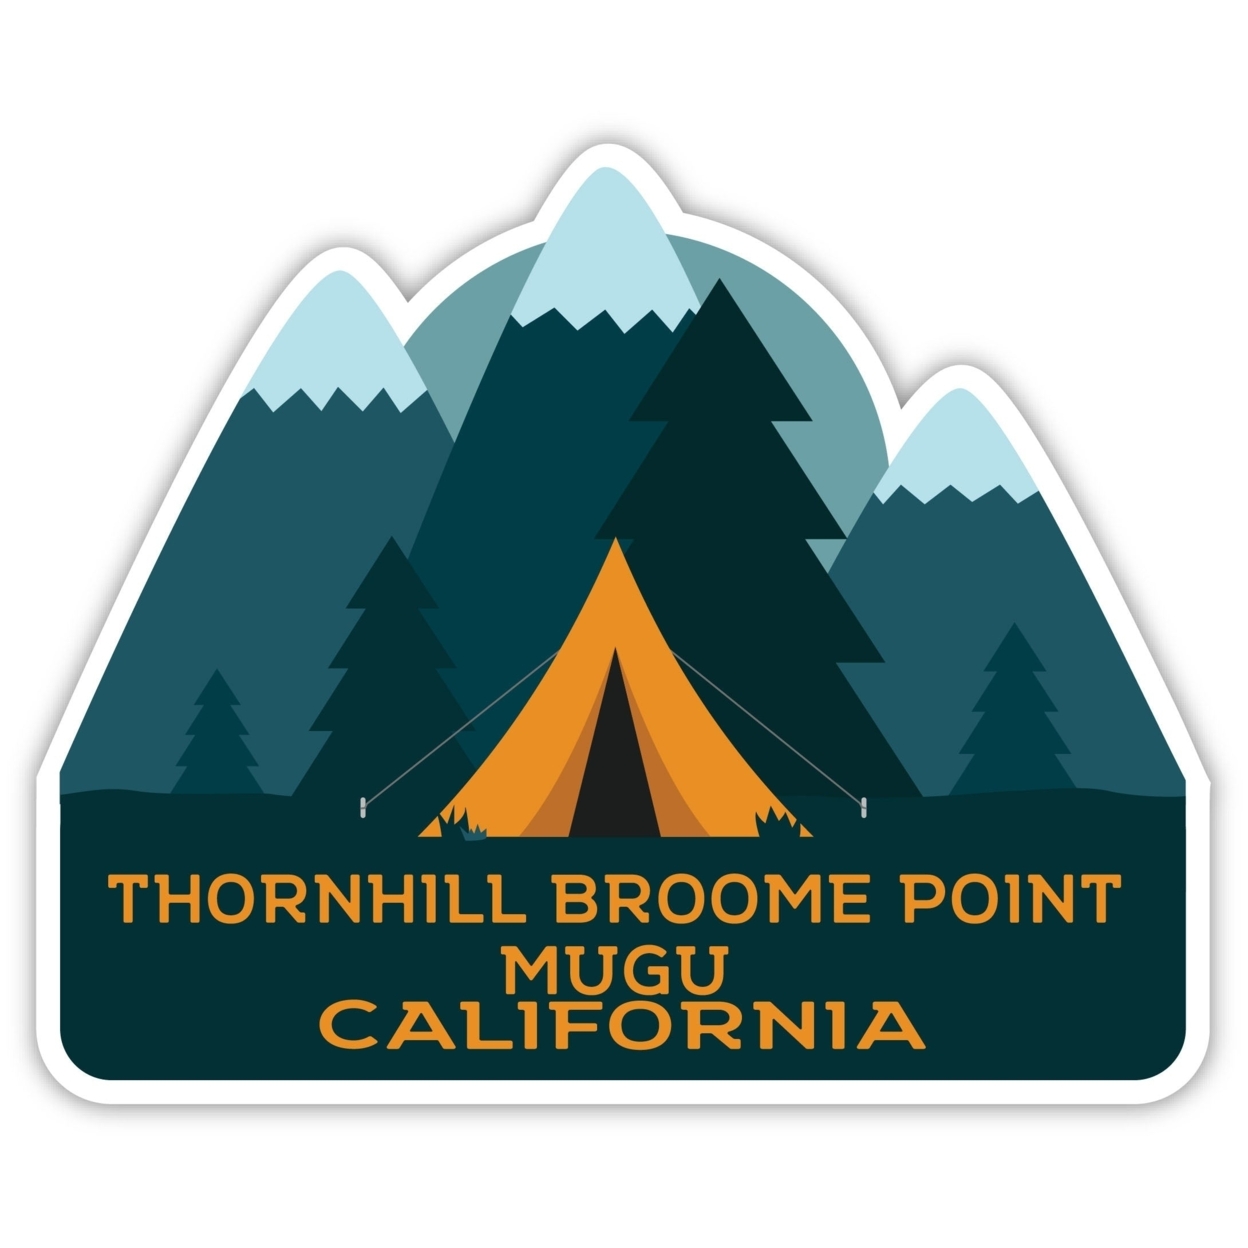 Thornhill Broome Point Mugu California Souvenir Decorative Stickers (Choose Theme And Size) - Single Unit, 4-Inch, Camp Life